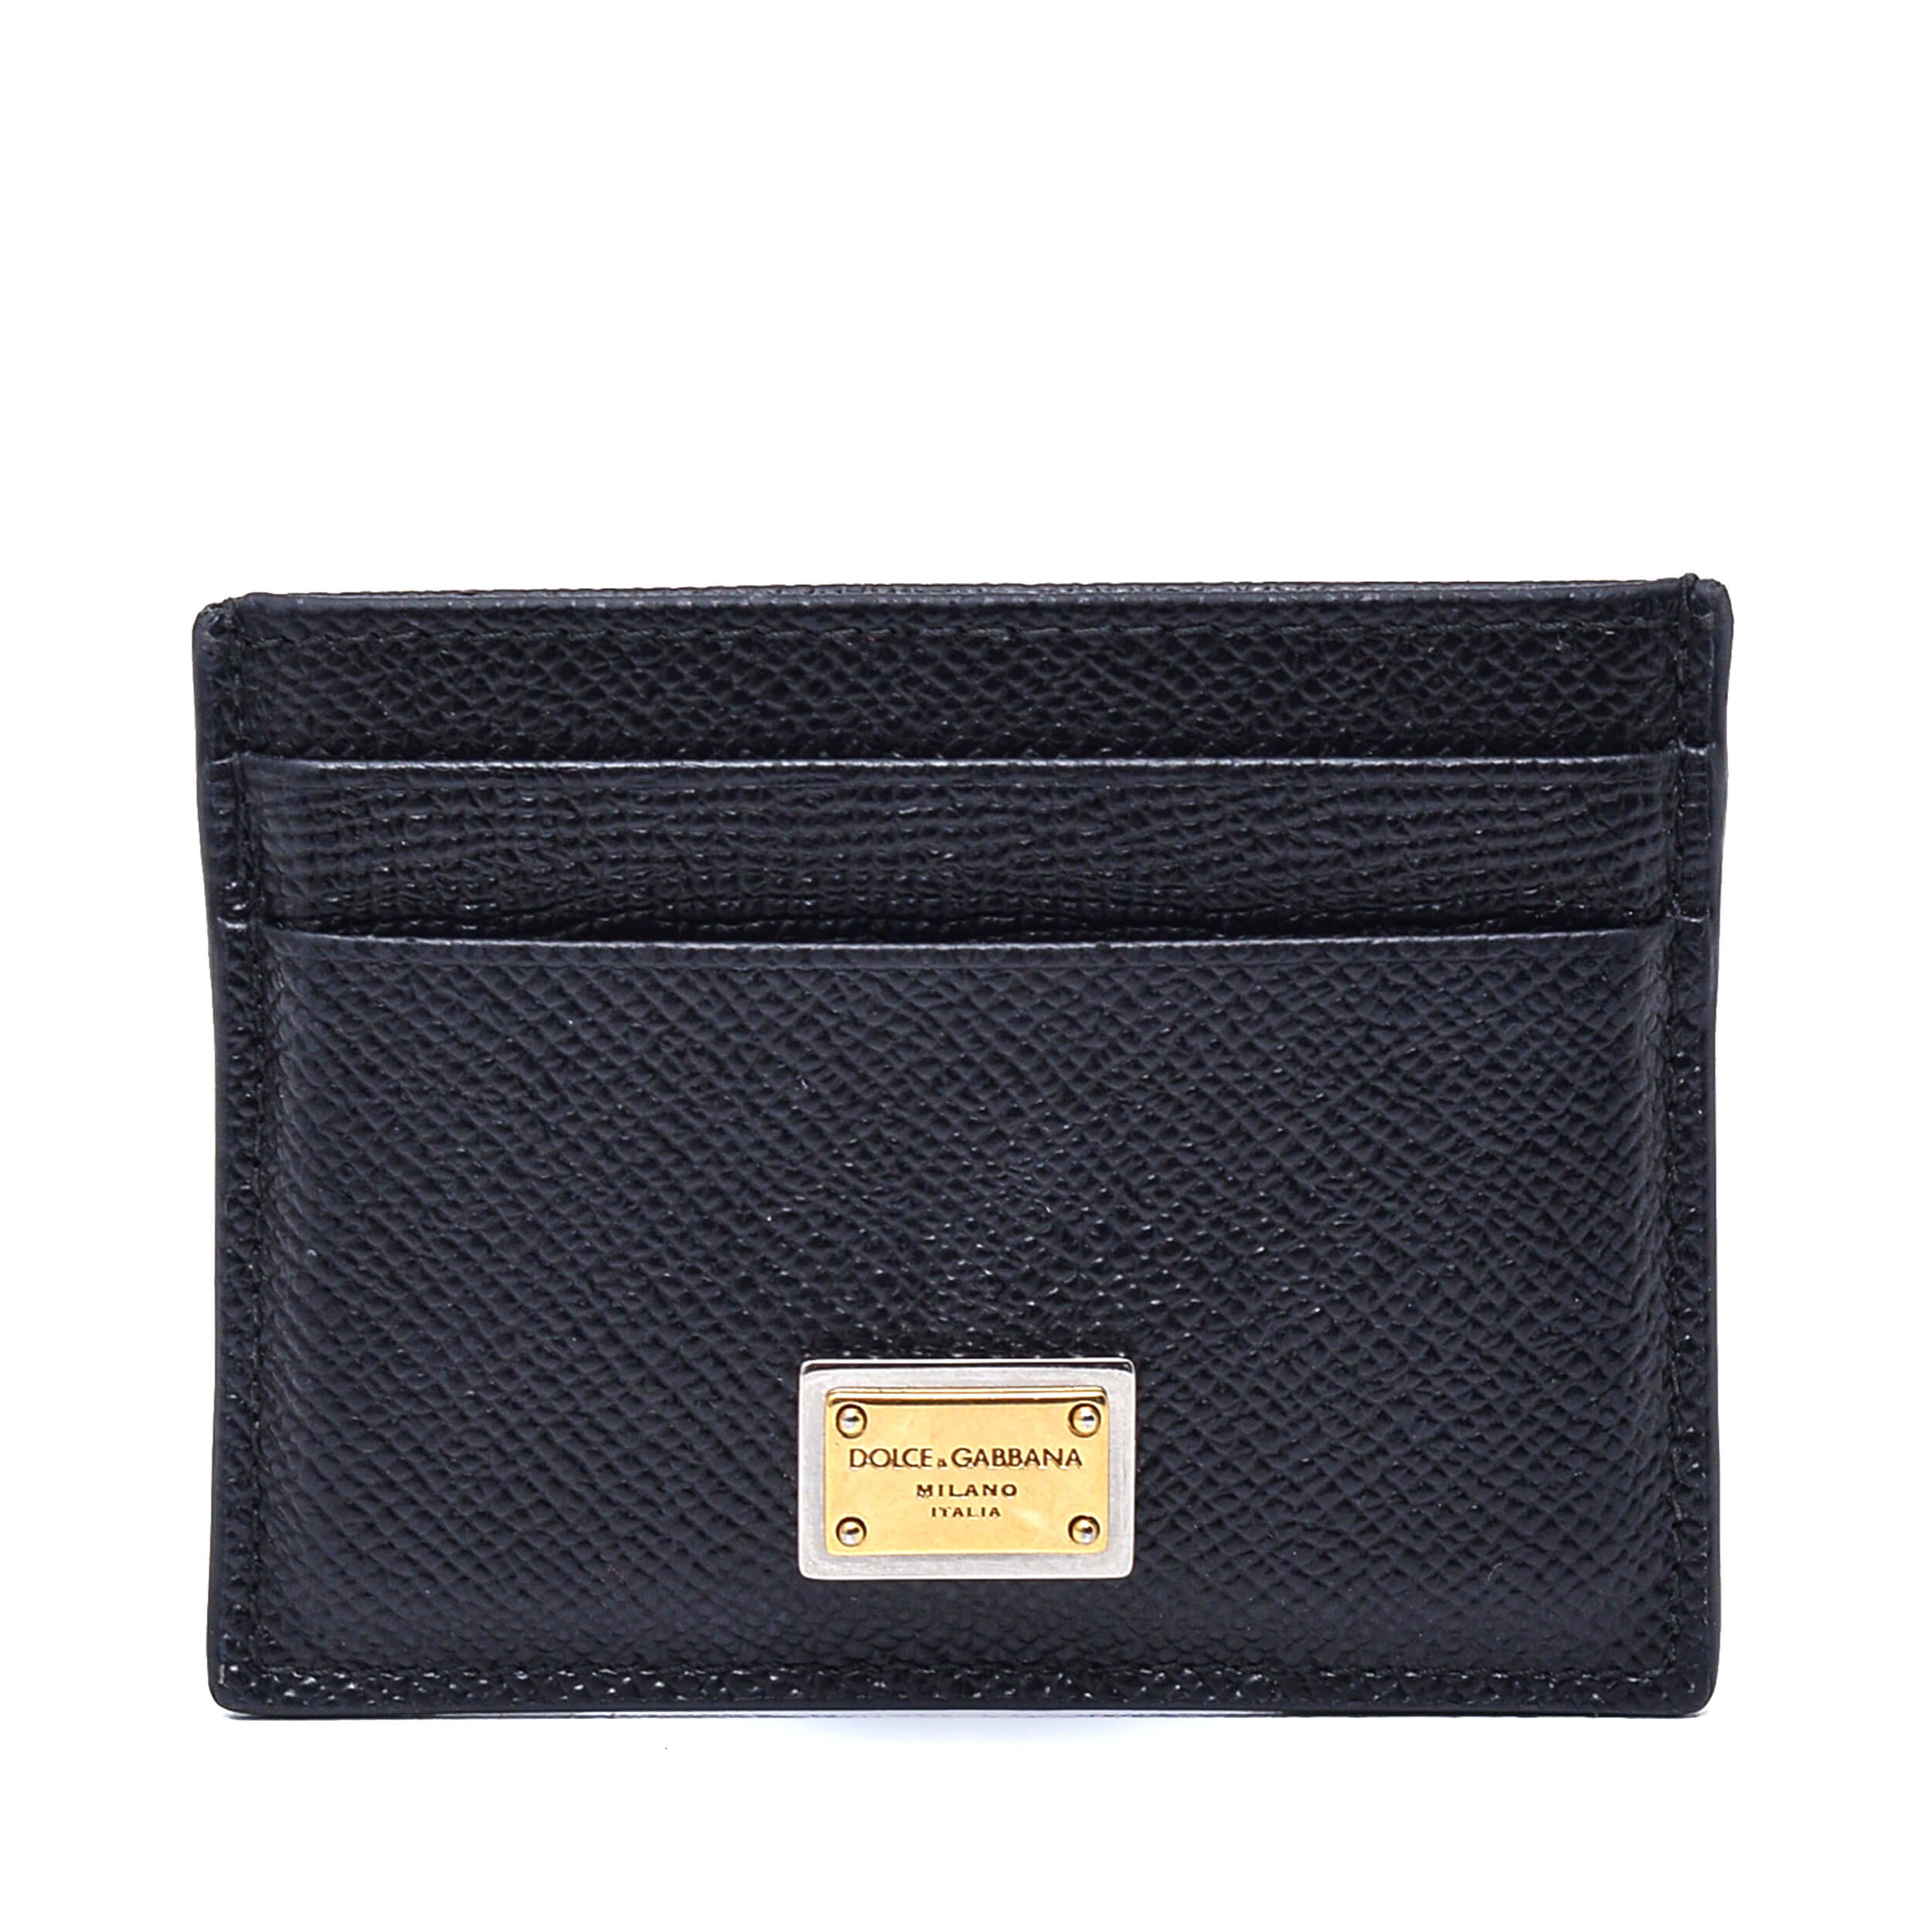 Dolce Gabbana - Black Leather Wallet